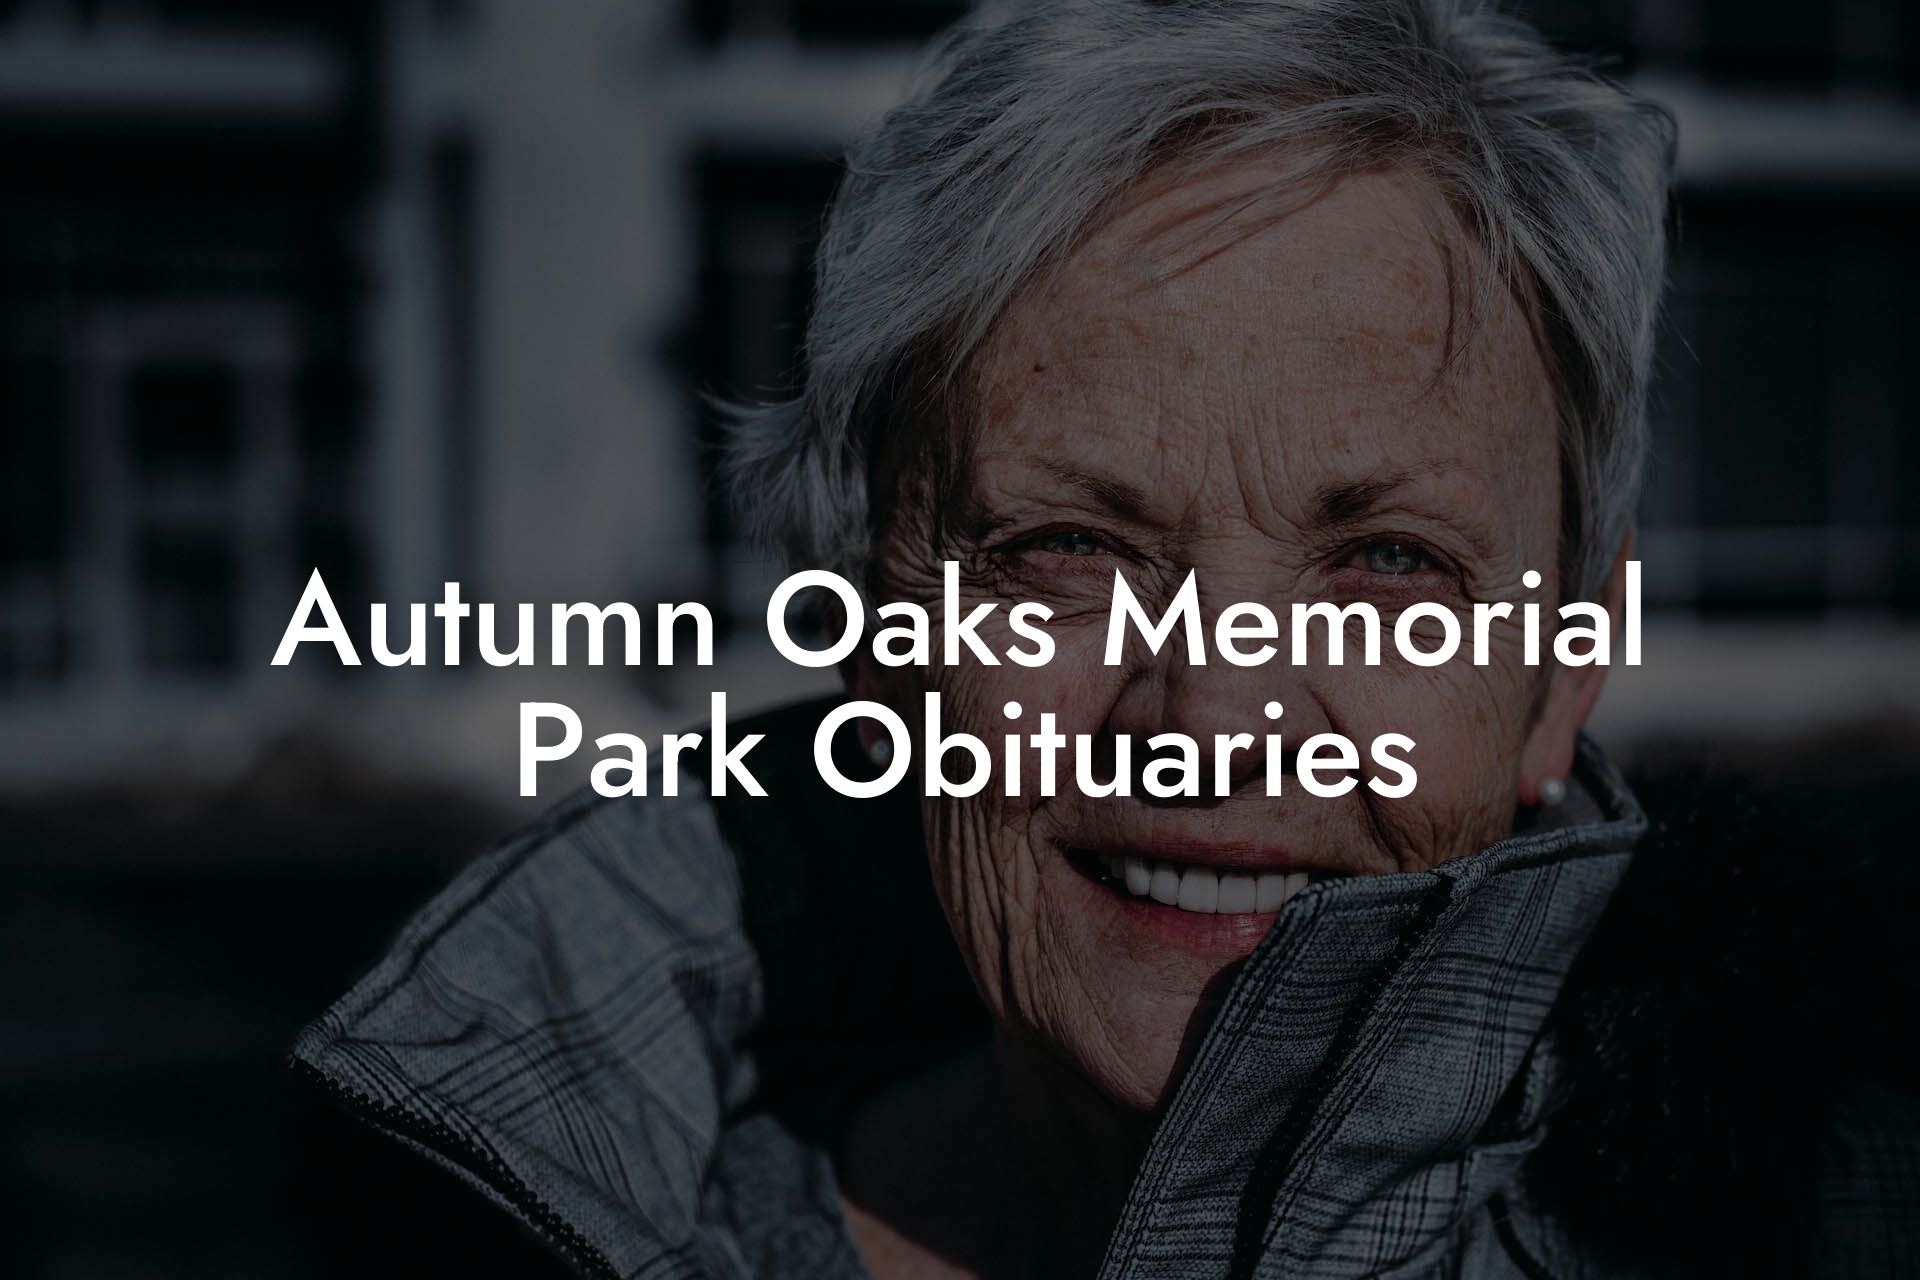 Autumn Oaks Memorial Park Obituaries